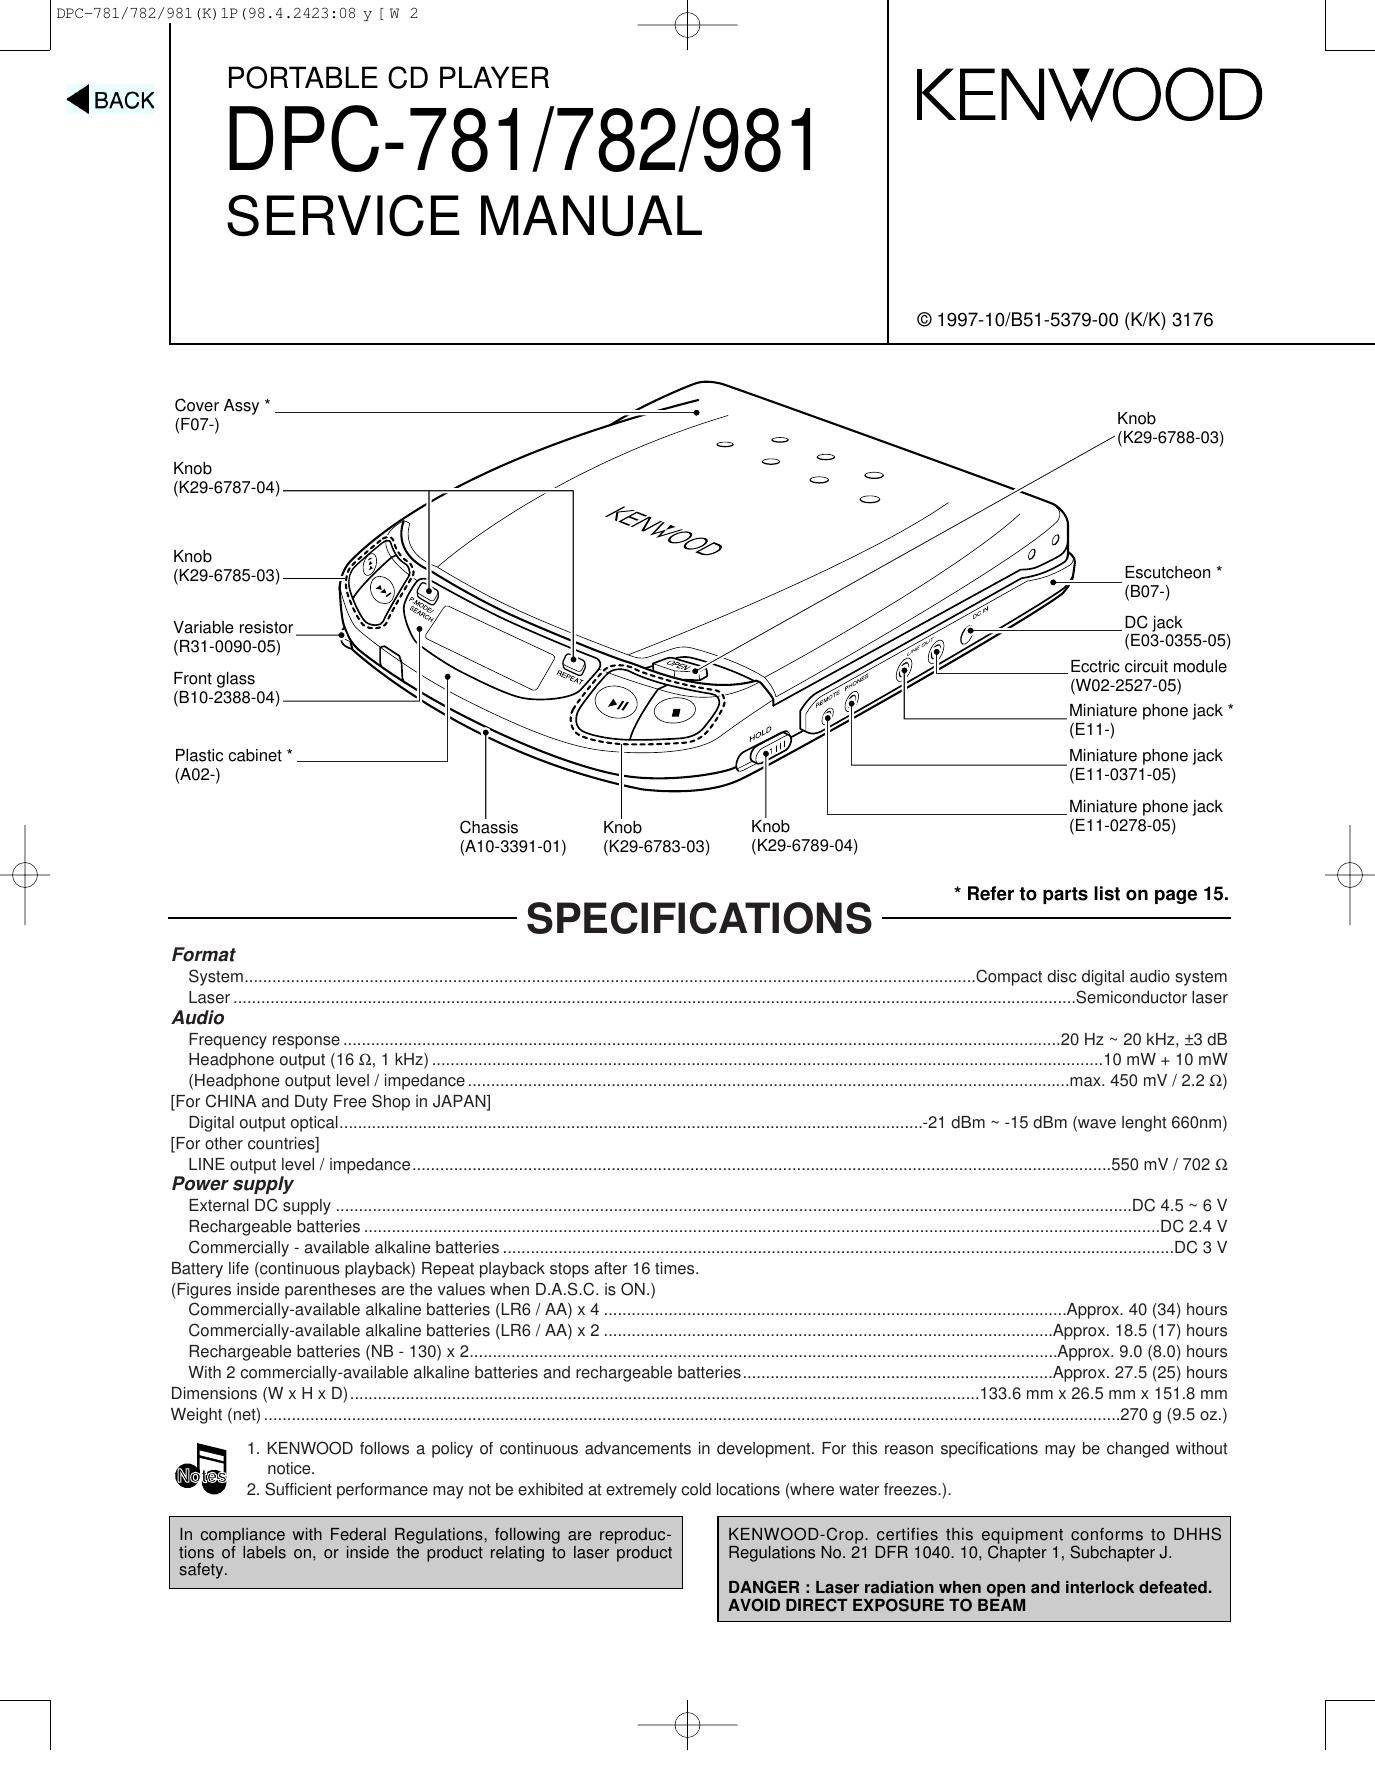 Kenwood DPC 981 Service Manual